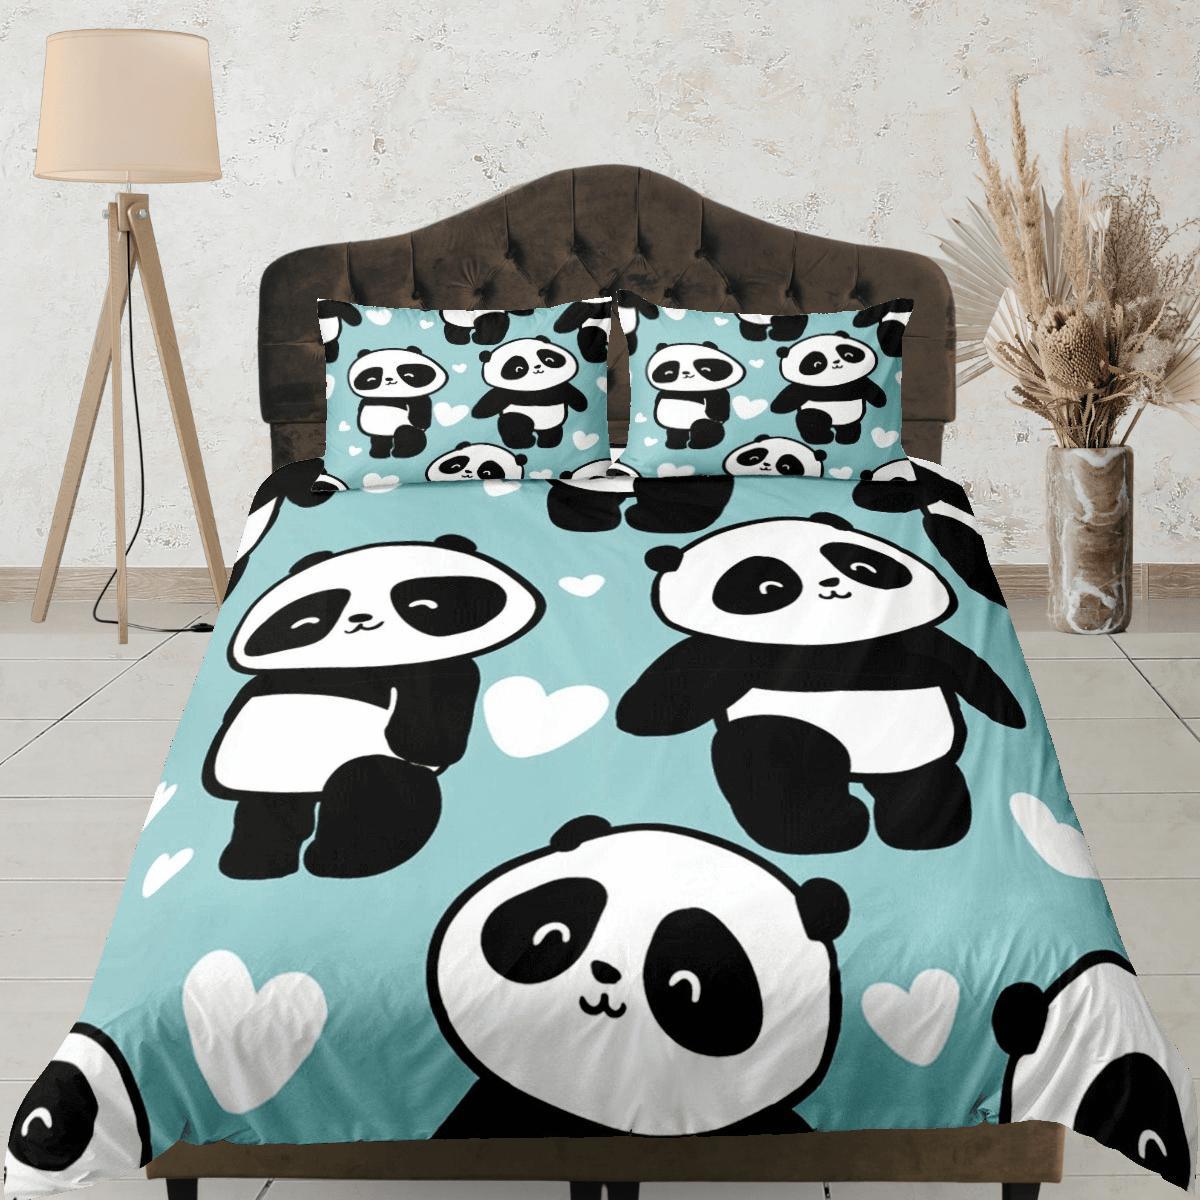 daintyduvet Cute Panda Duvet Cover Set Kids Bedroom, Green Bedding with Pillowcase